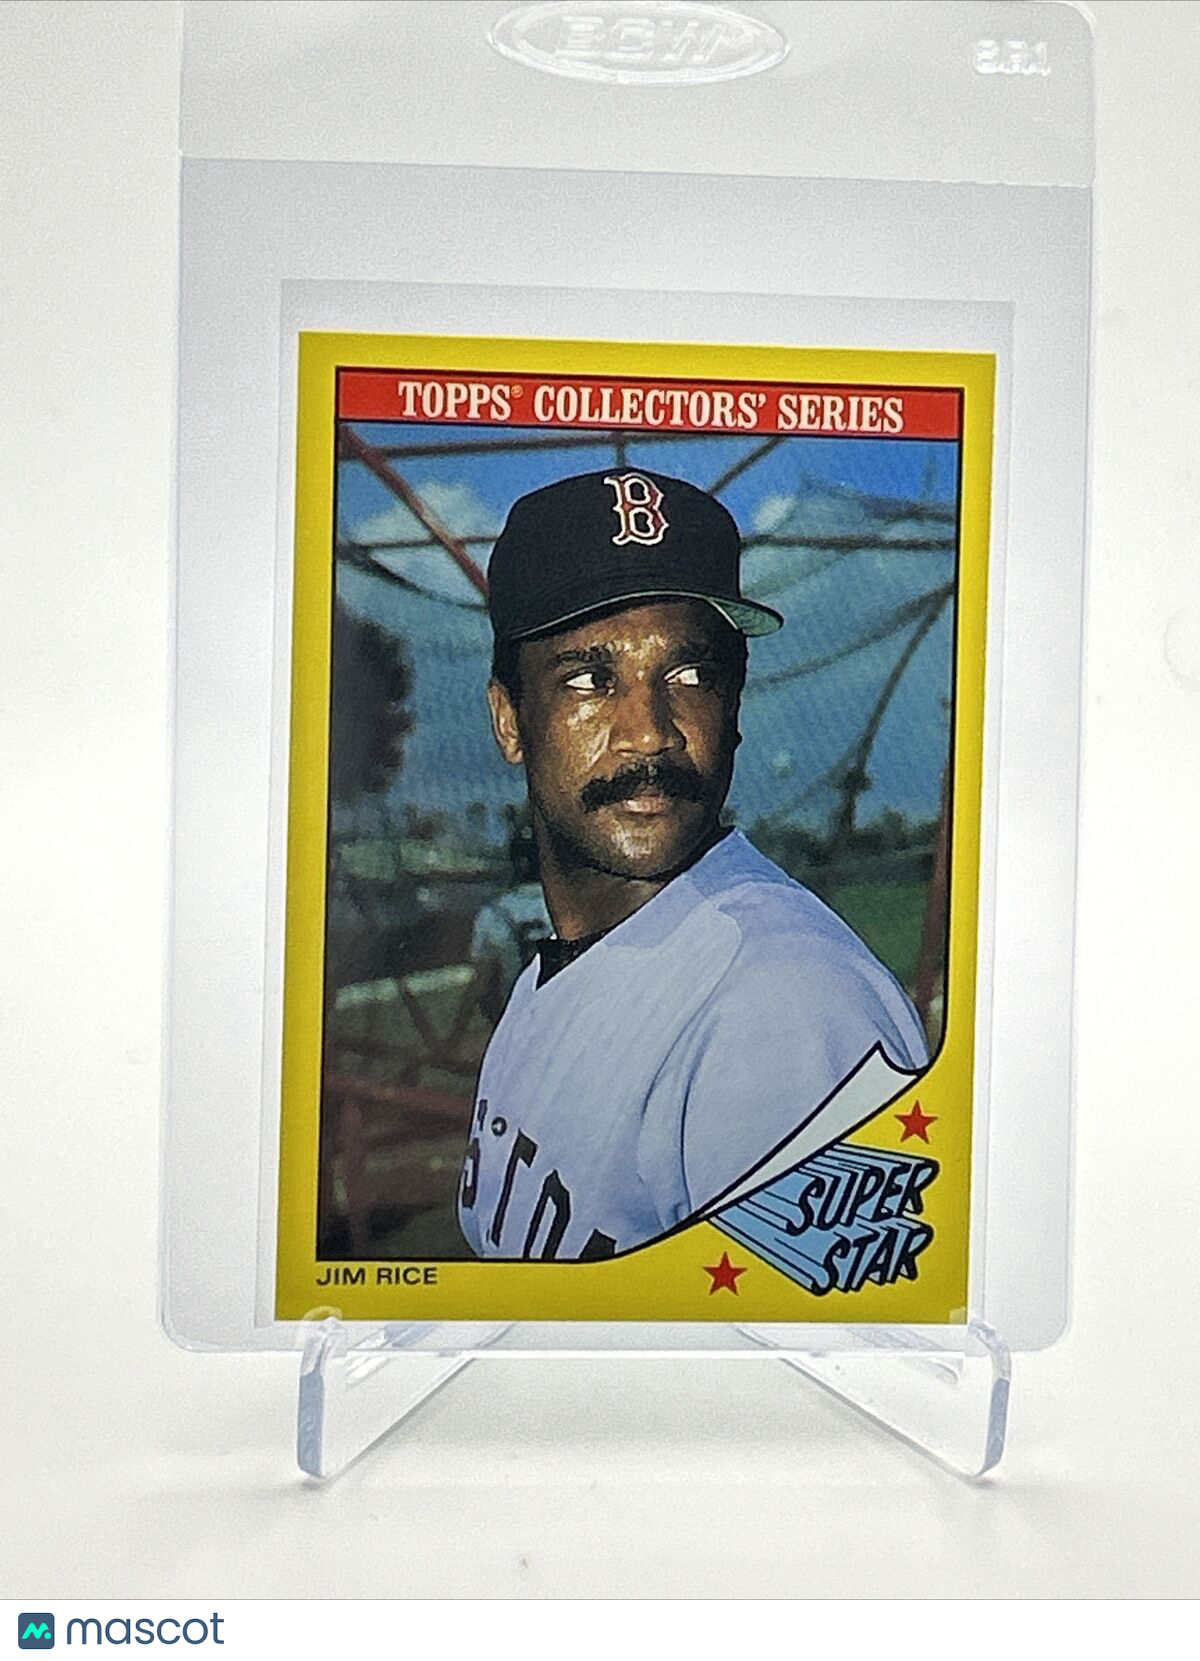 1986 Topps Baseball Champion Superstars Jim Rice Card #28 Mint FREE SHIPPING